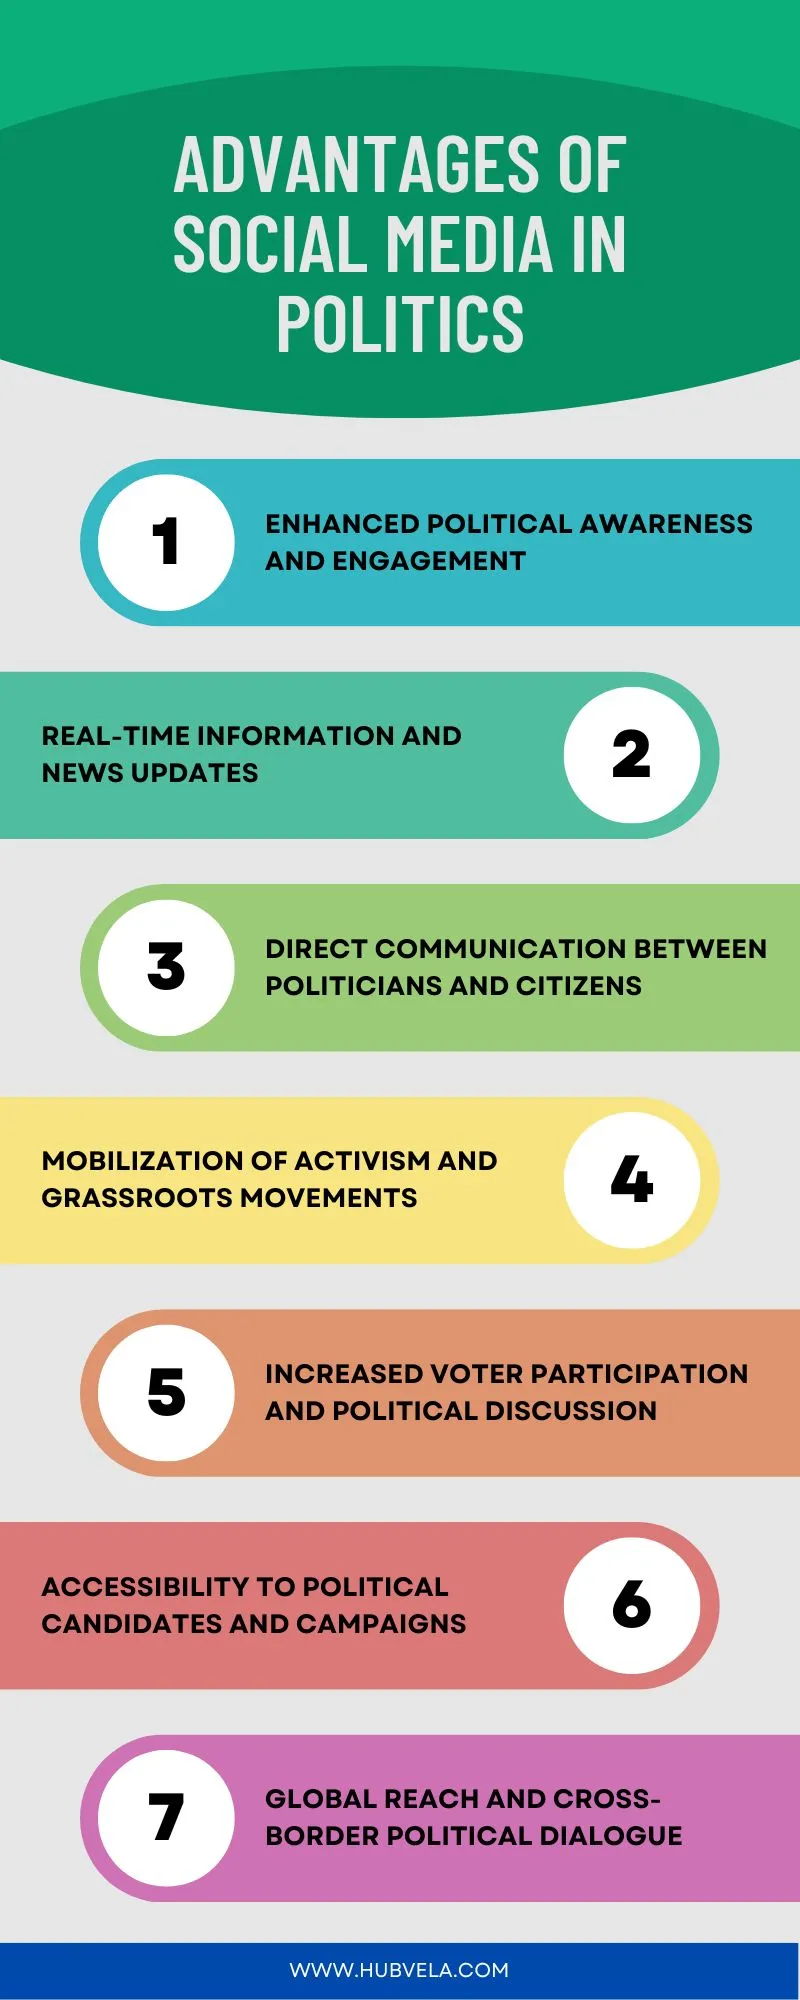 Advantages of Social Media in Politics infographic